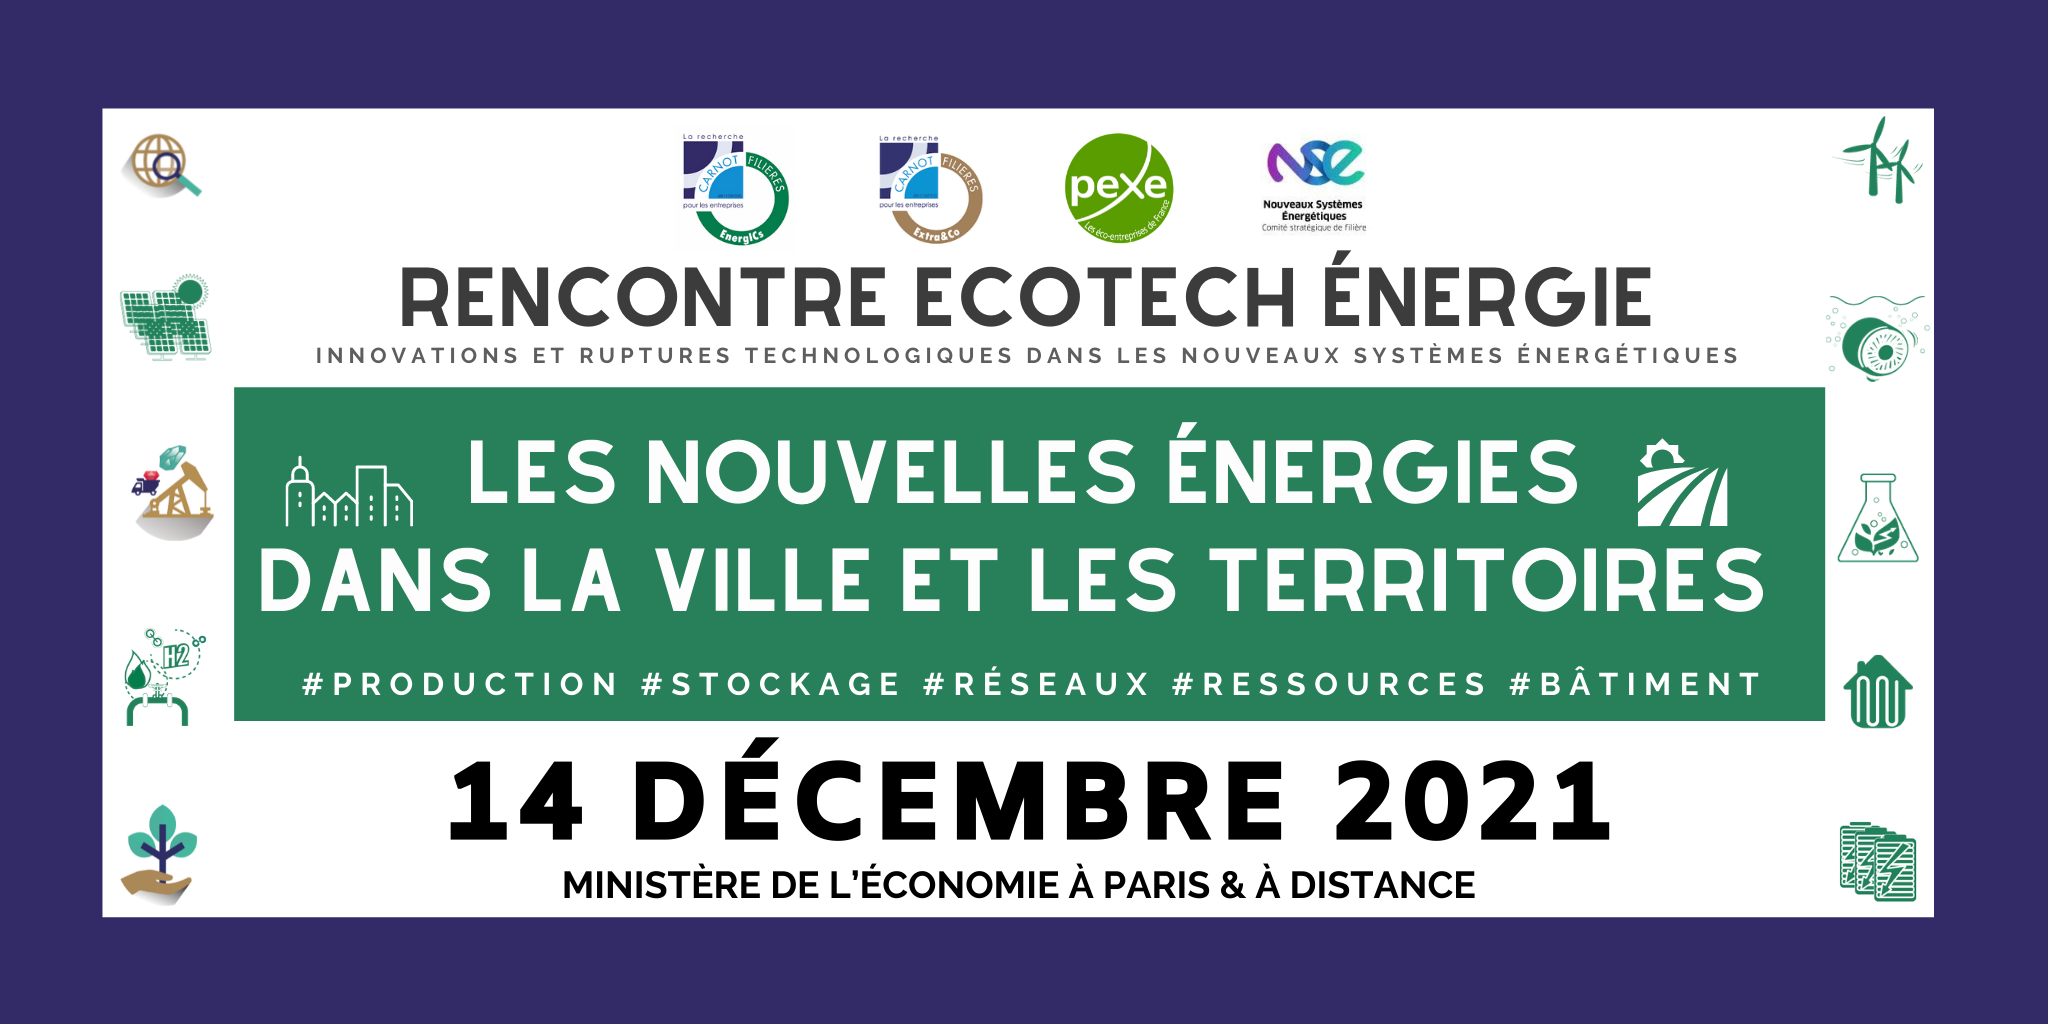 Rencontre Ecotech Energie 2021